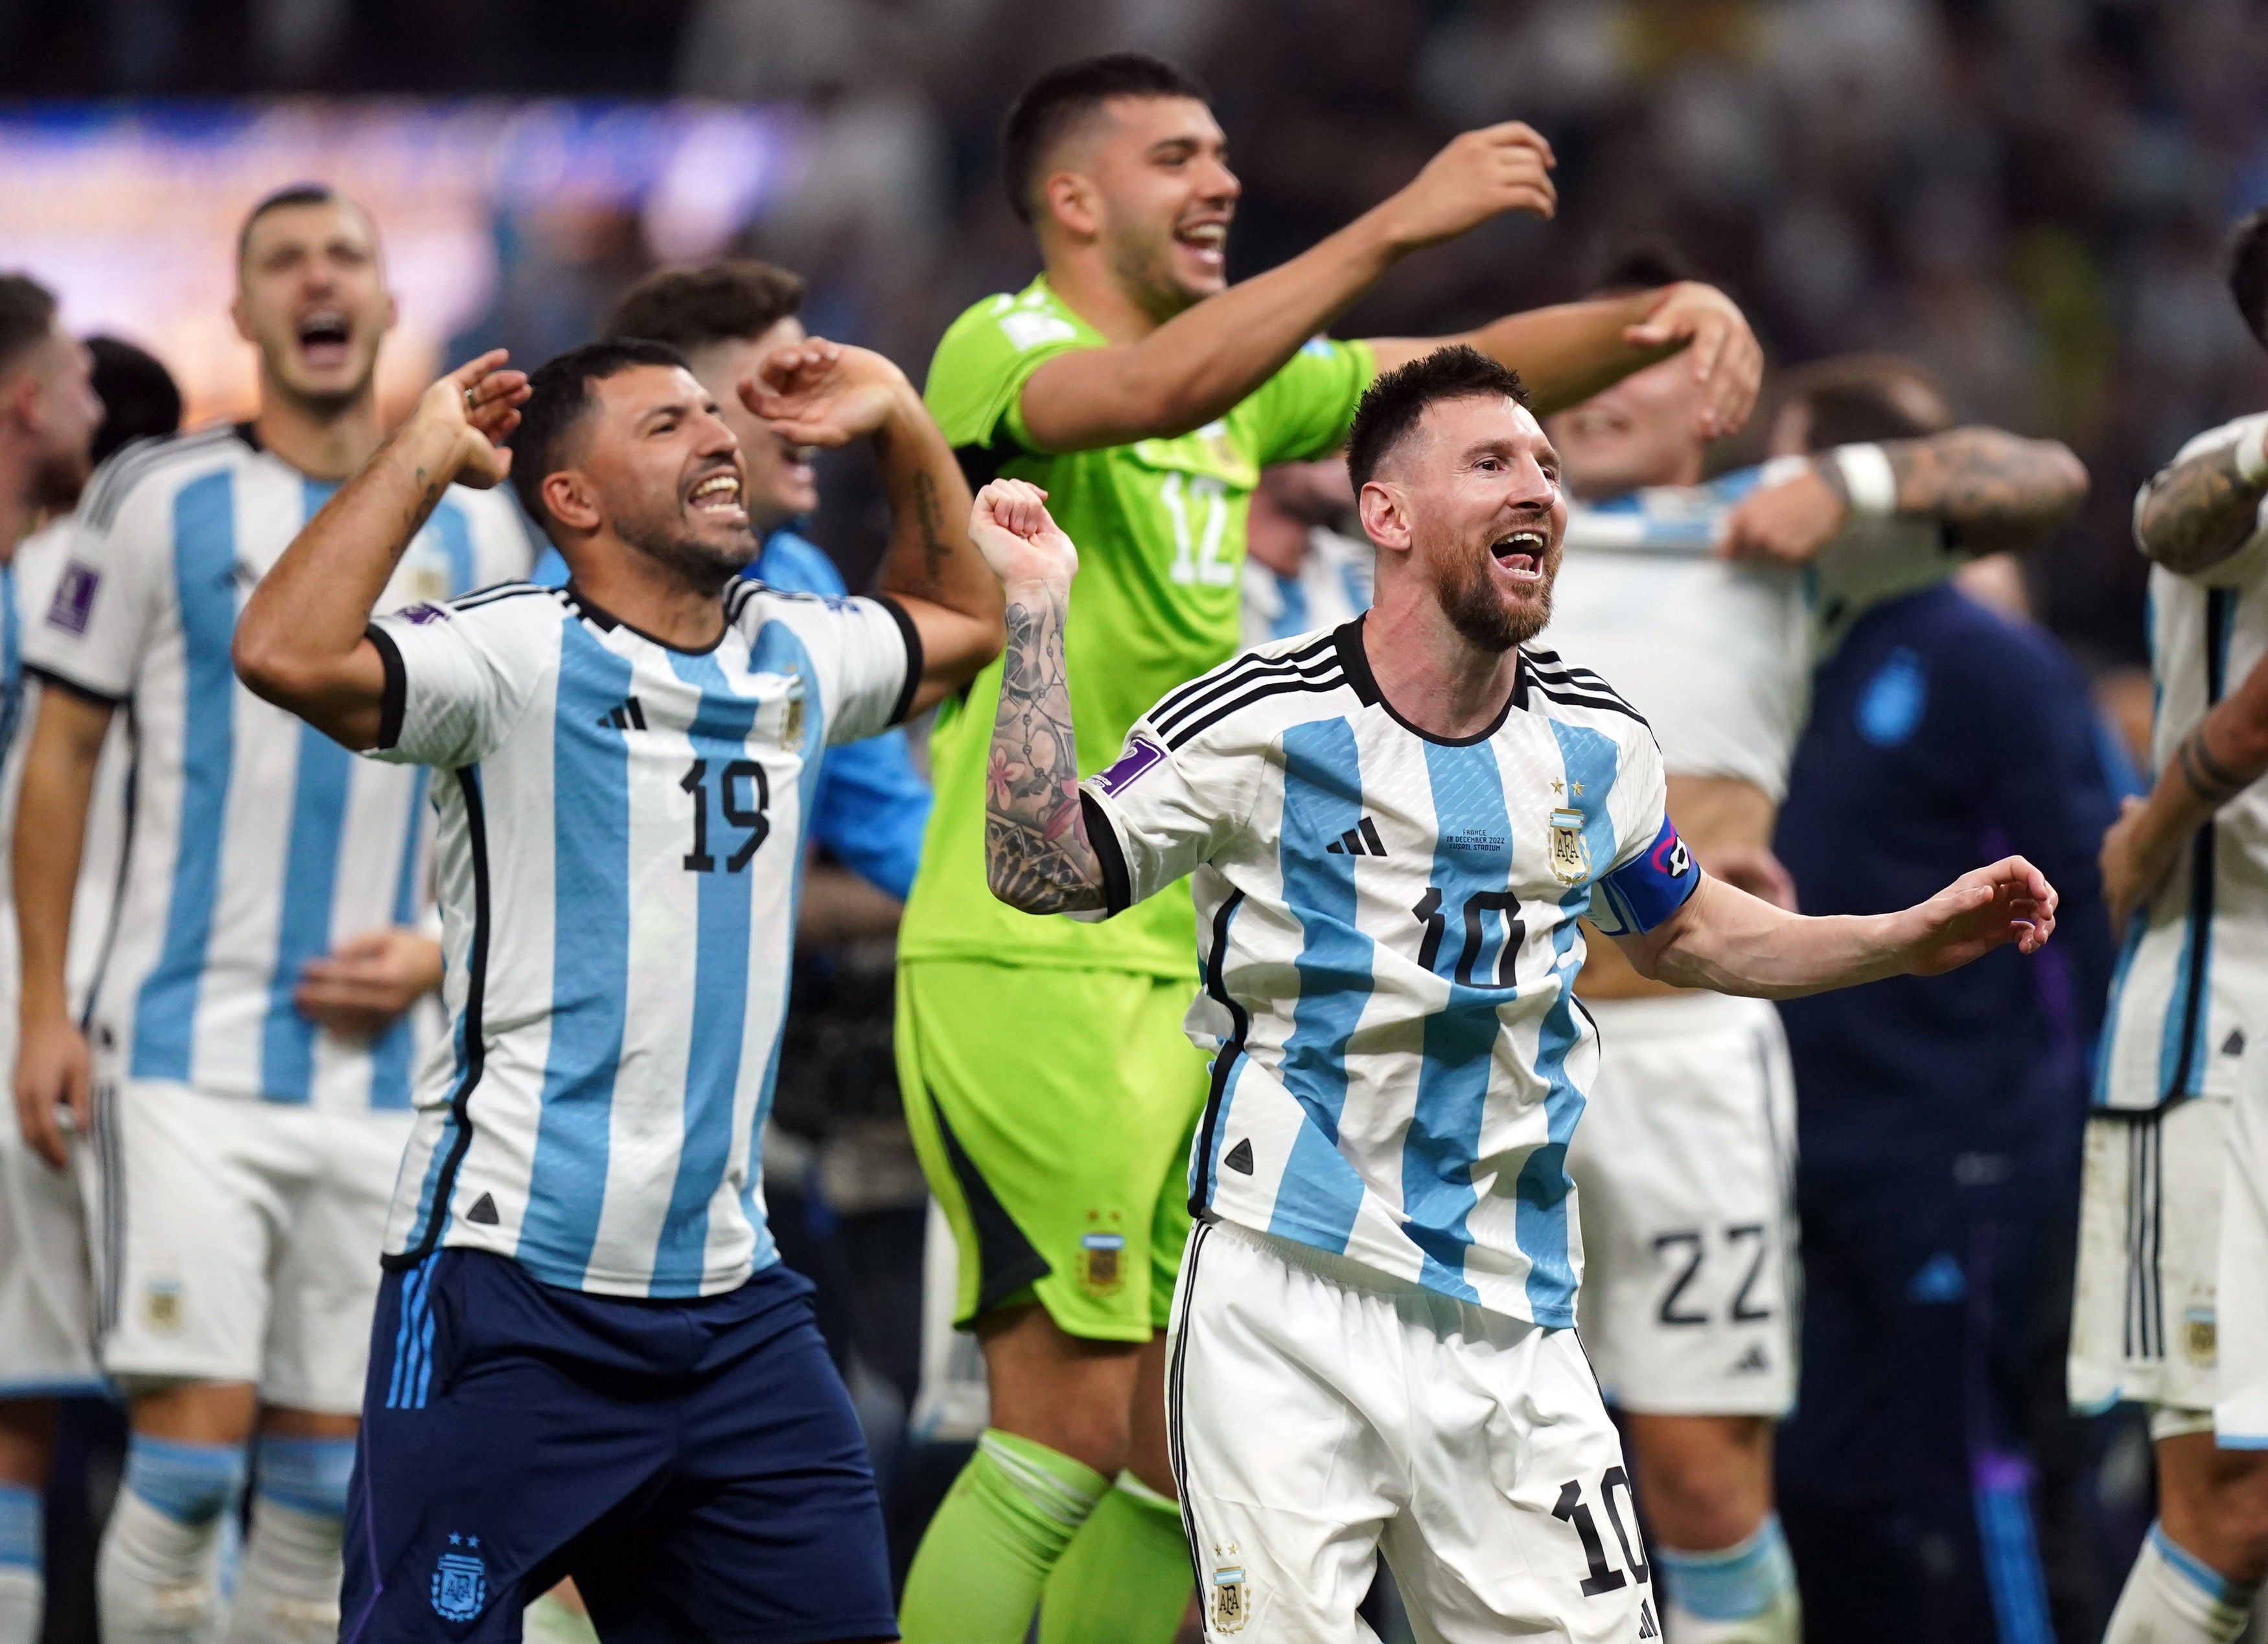 Sergio Agüero and Lionel Messi celebrate after the game